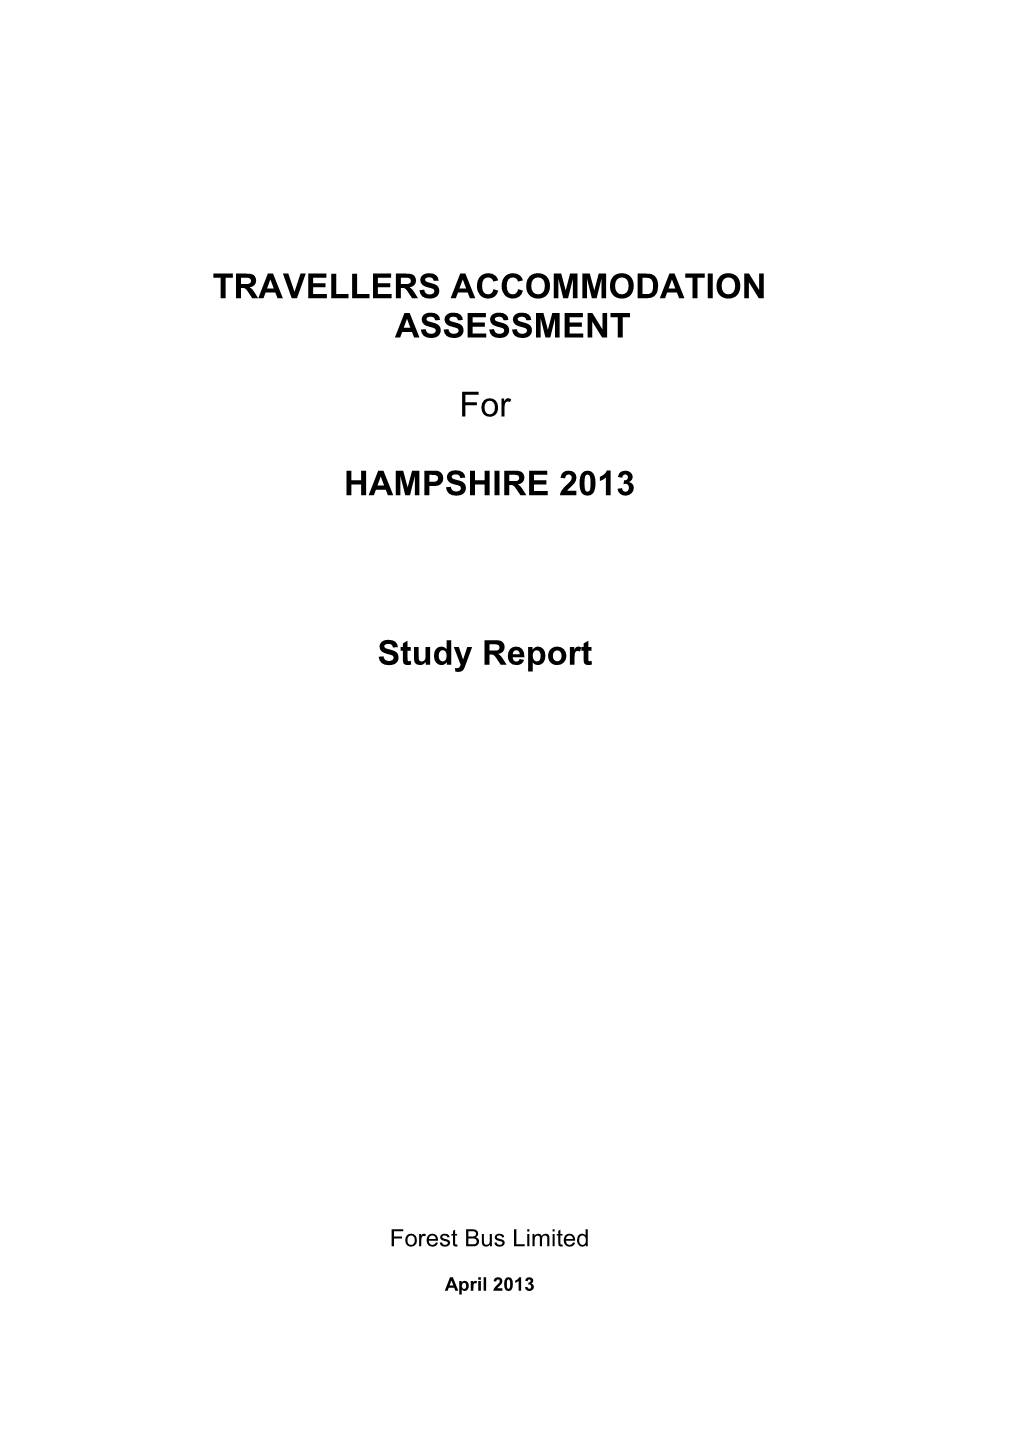 Travellers Accommodation Assessment